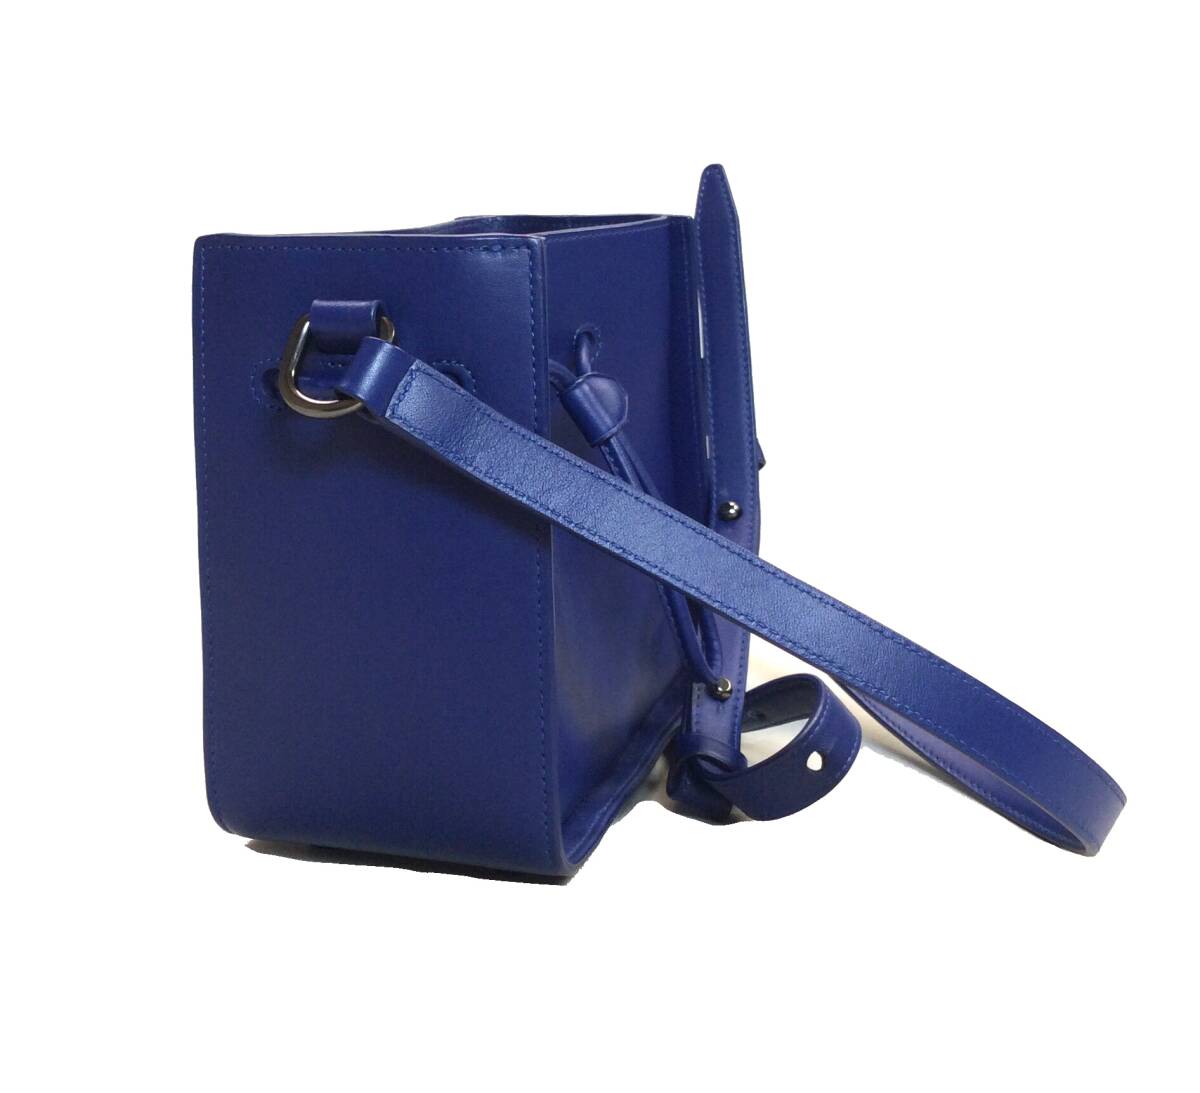 3.1Phillip Lims Lee one Philip rim shoulder bag bag leather sk air blue blue (ma)